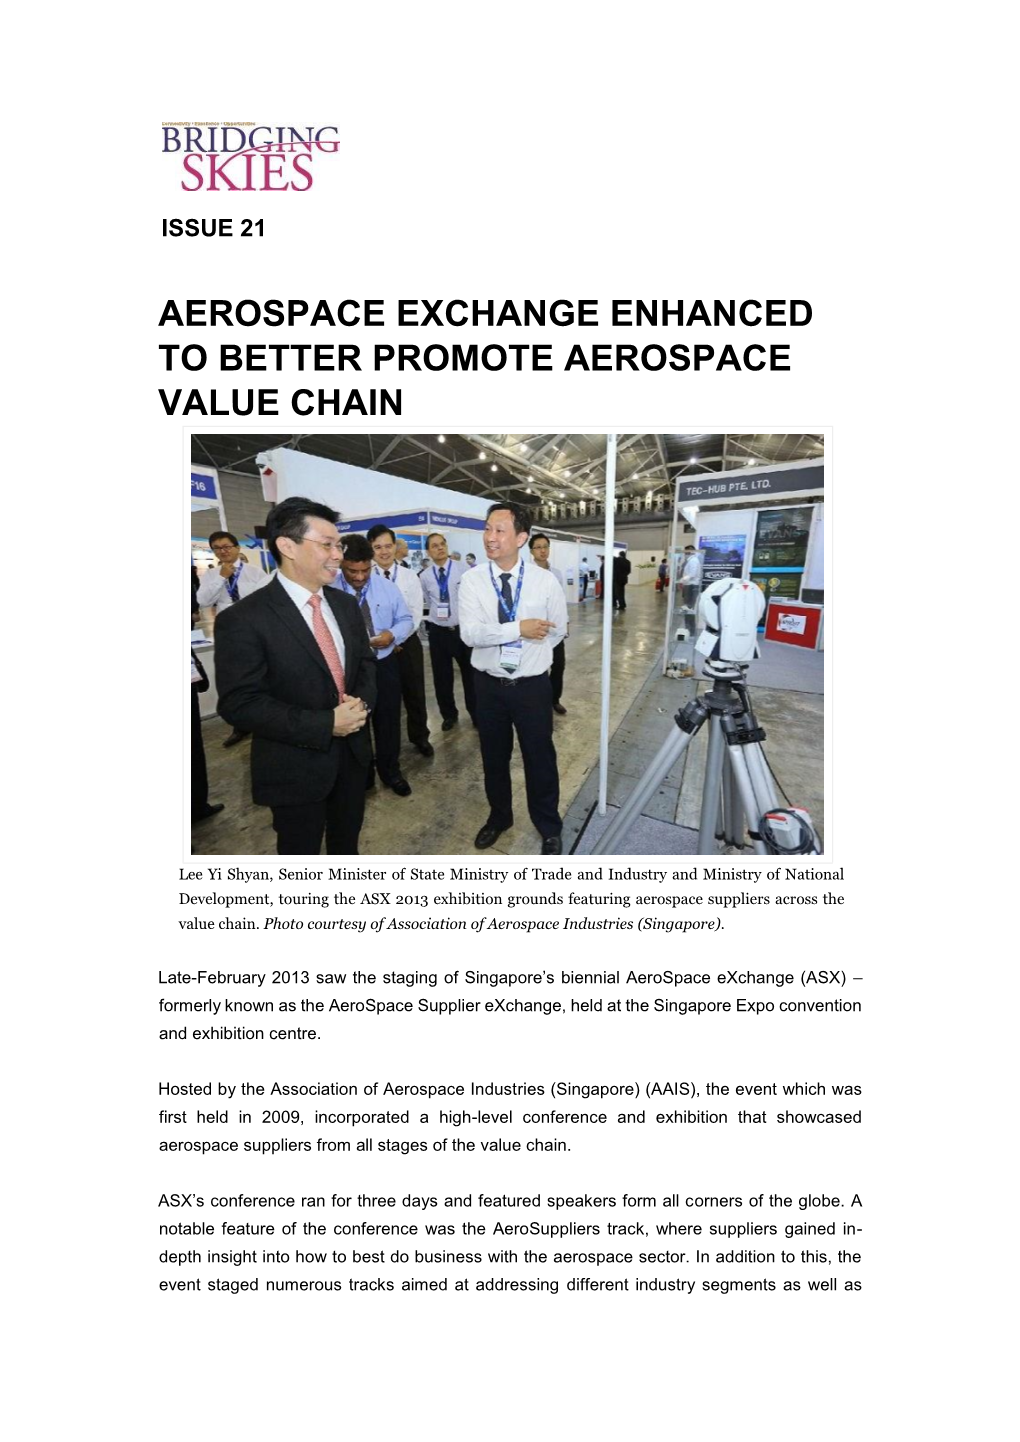 Aerospace Exchange Enhanced to Better